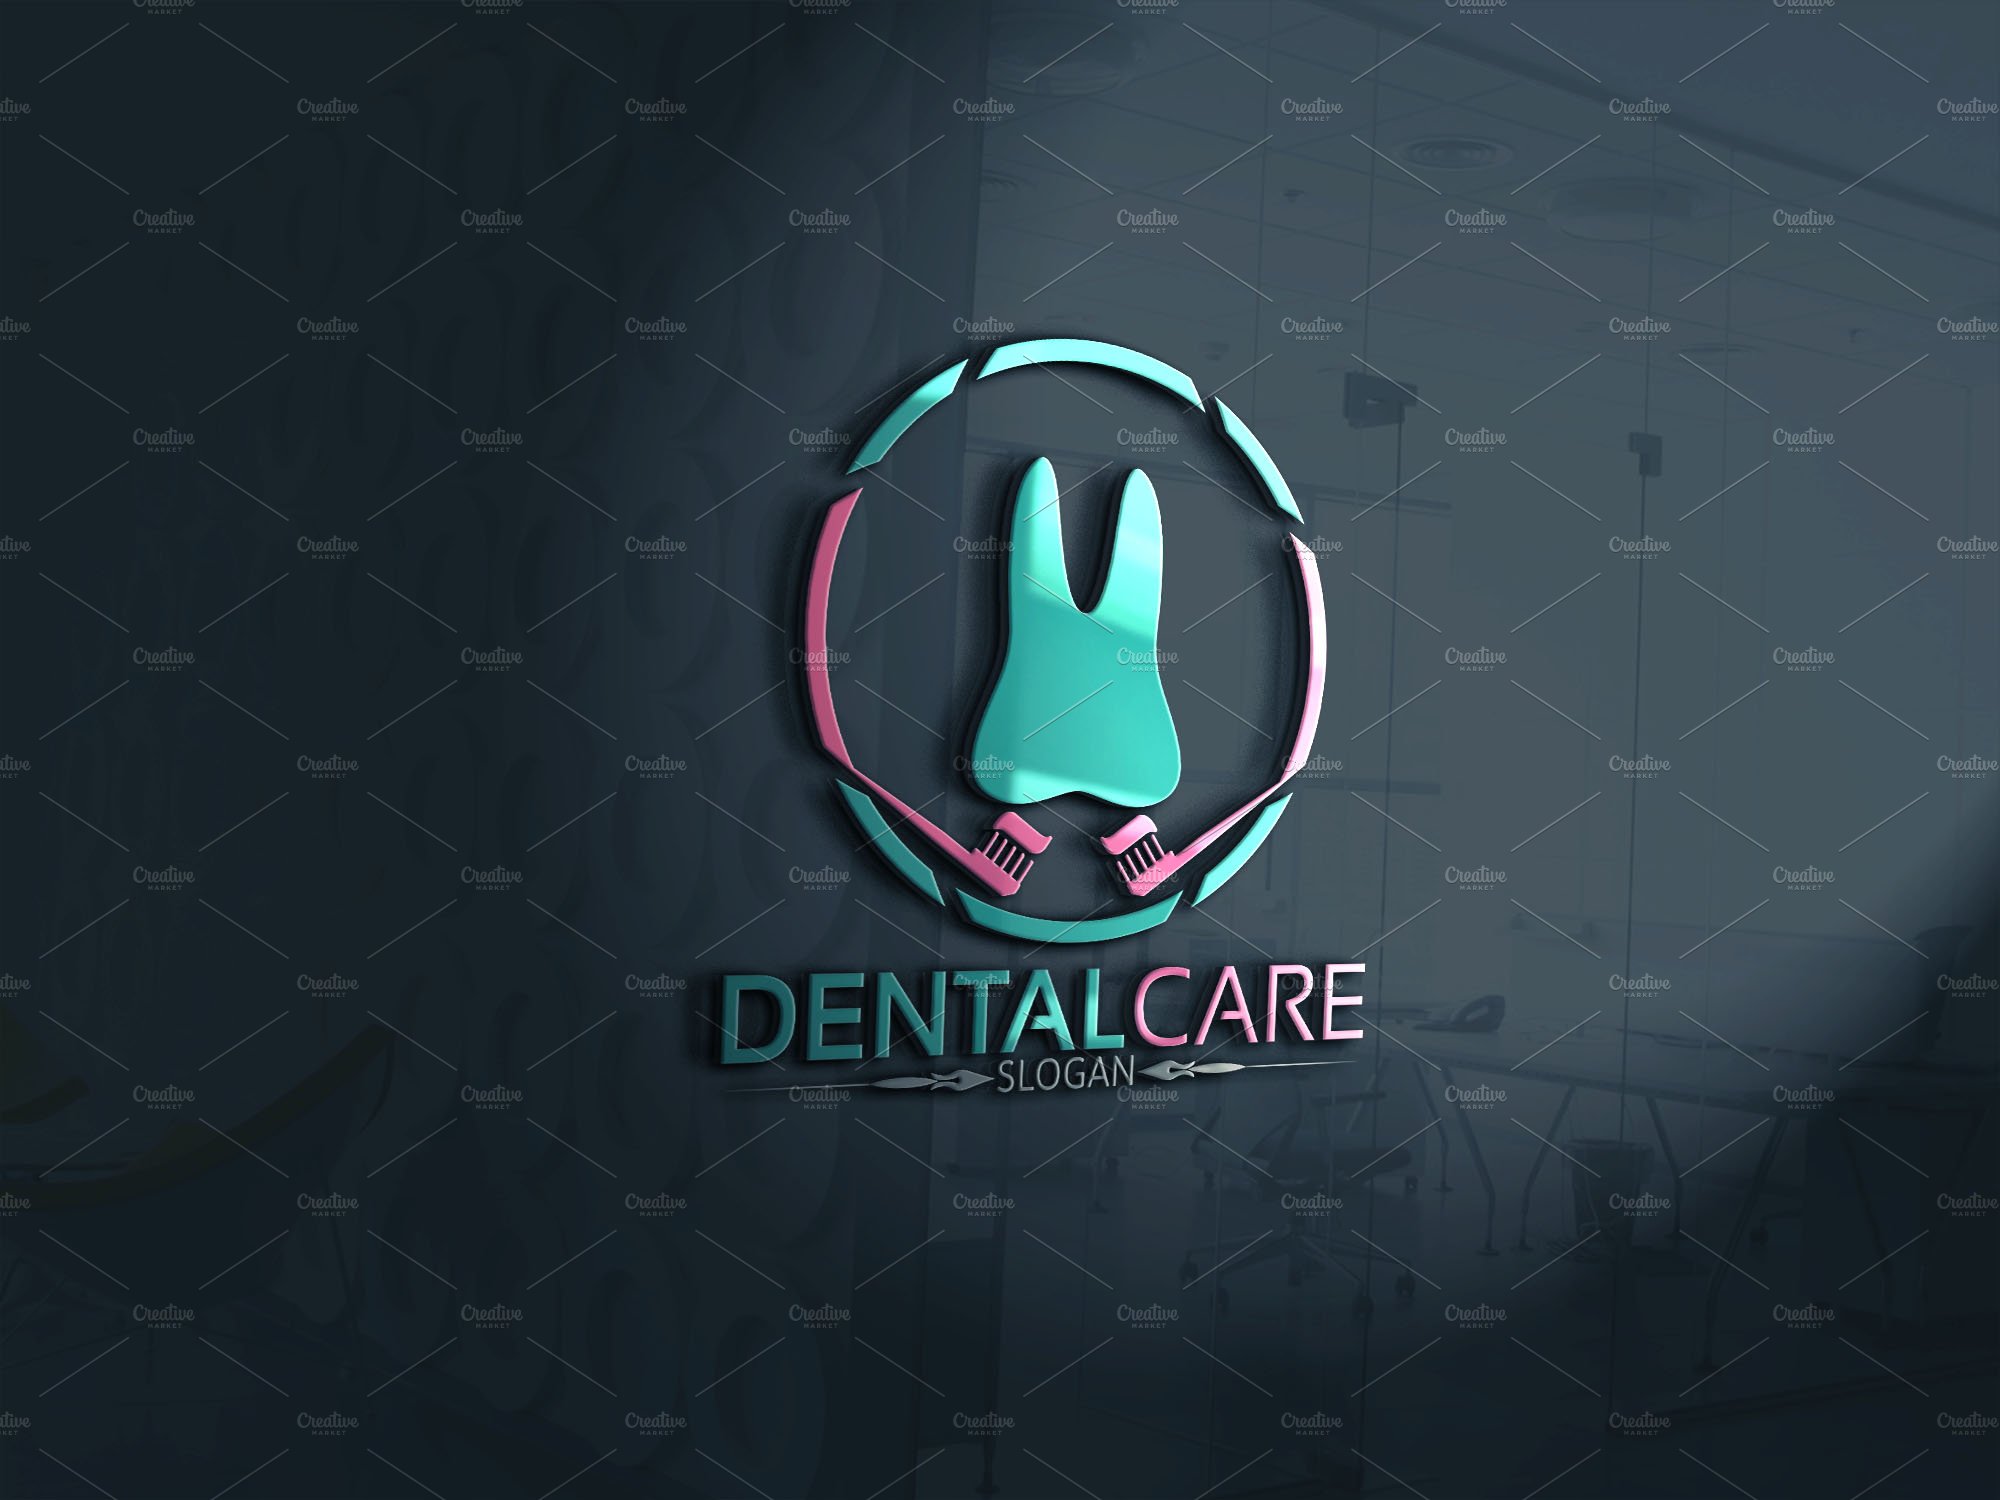 Dental Logo Version 2 cover image.